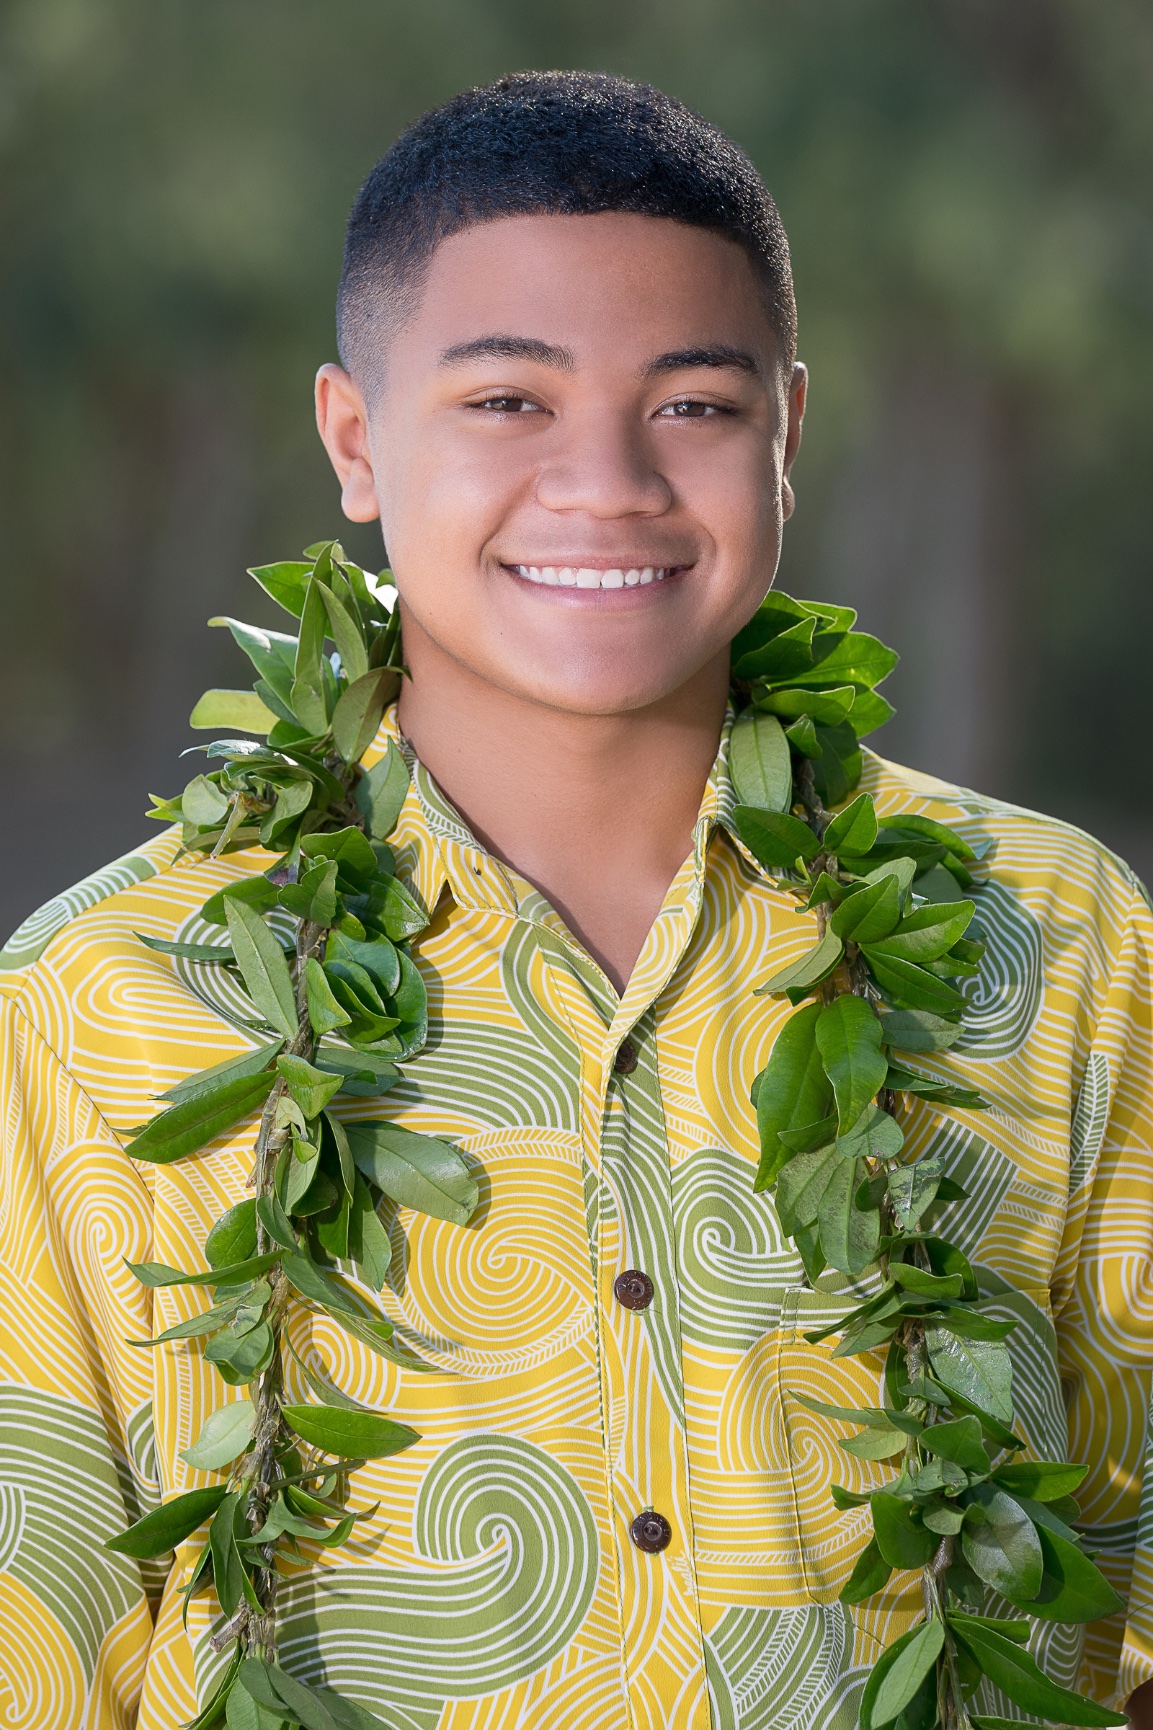 Maui Senior Portraits by Aubrey Hord Photography in Maui, Hawaii